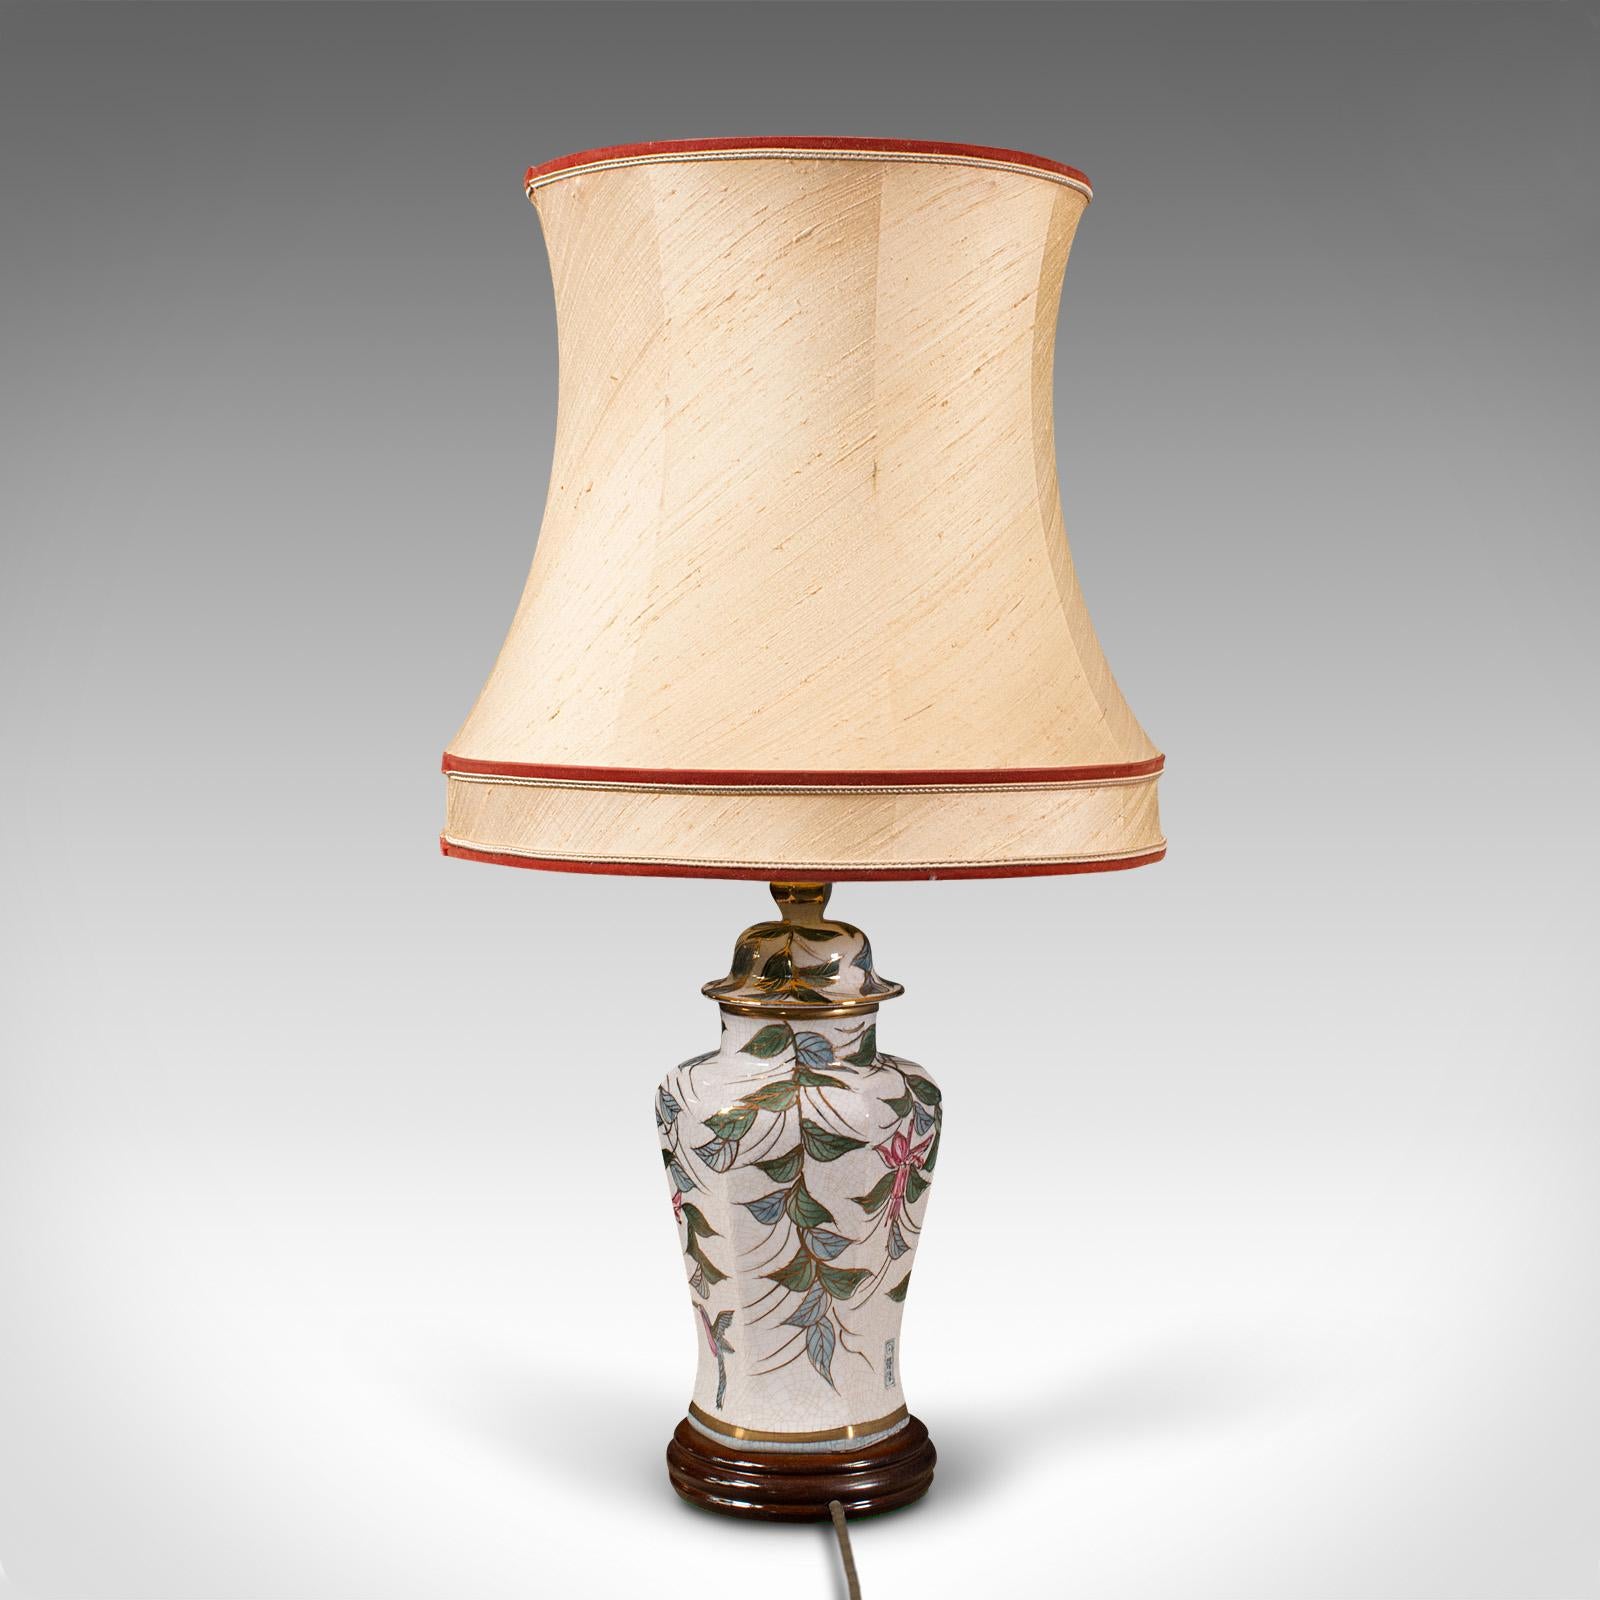 Vintage Table Lamp, Chinese, Ceramic, Decorative Light, Art Deco, Circa 1940 For Sale 1